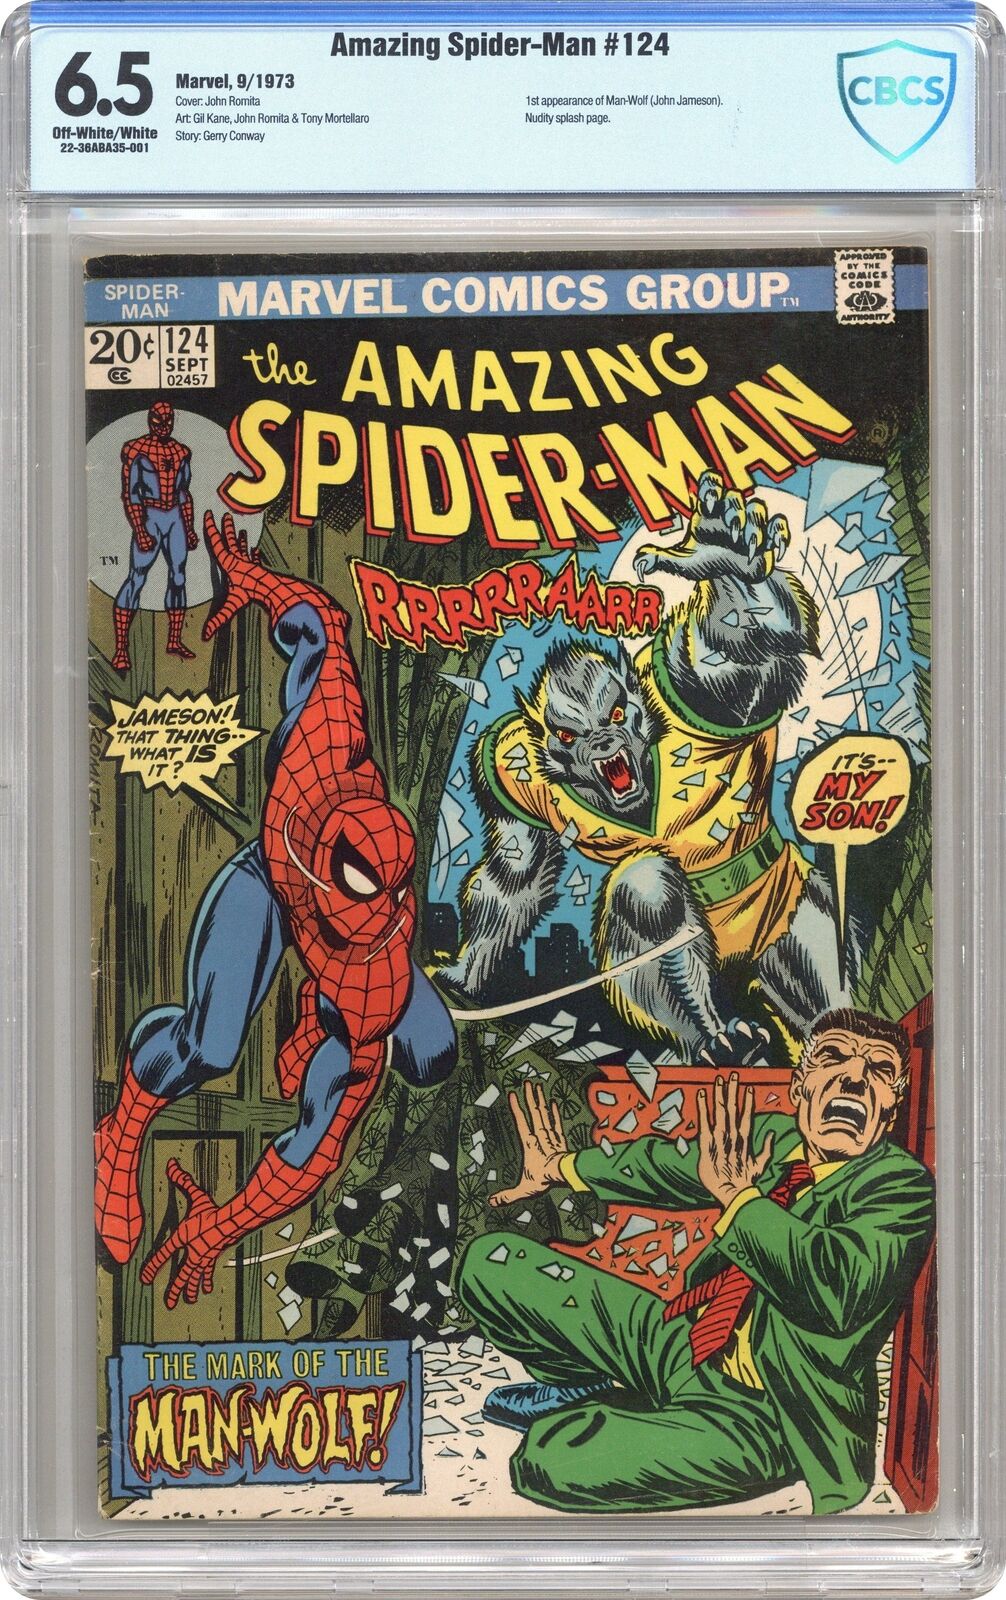 Amazing Spider-Man #124 CBCS 6.5 1973 22-36ABA35-001 1st app. Man-Wolf